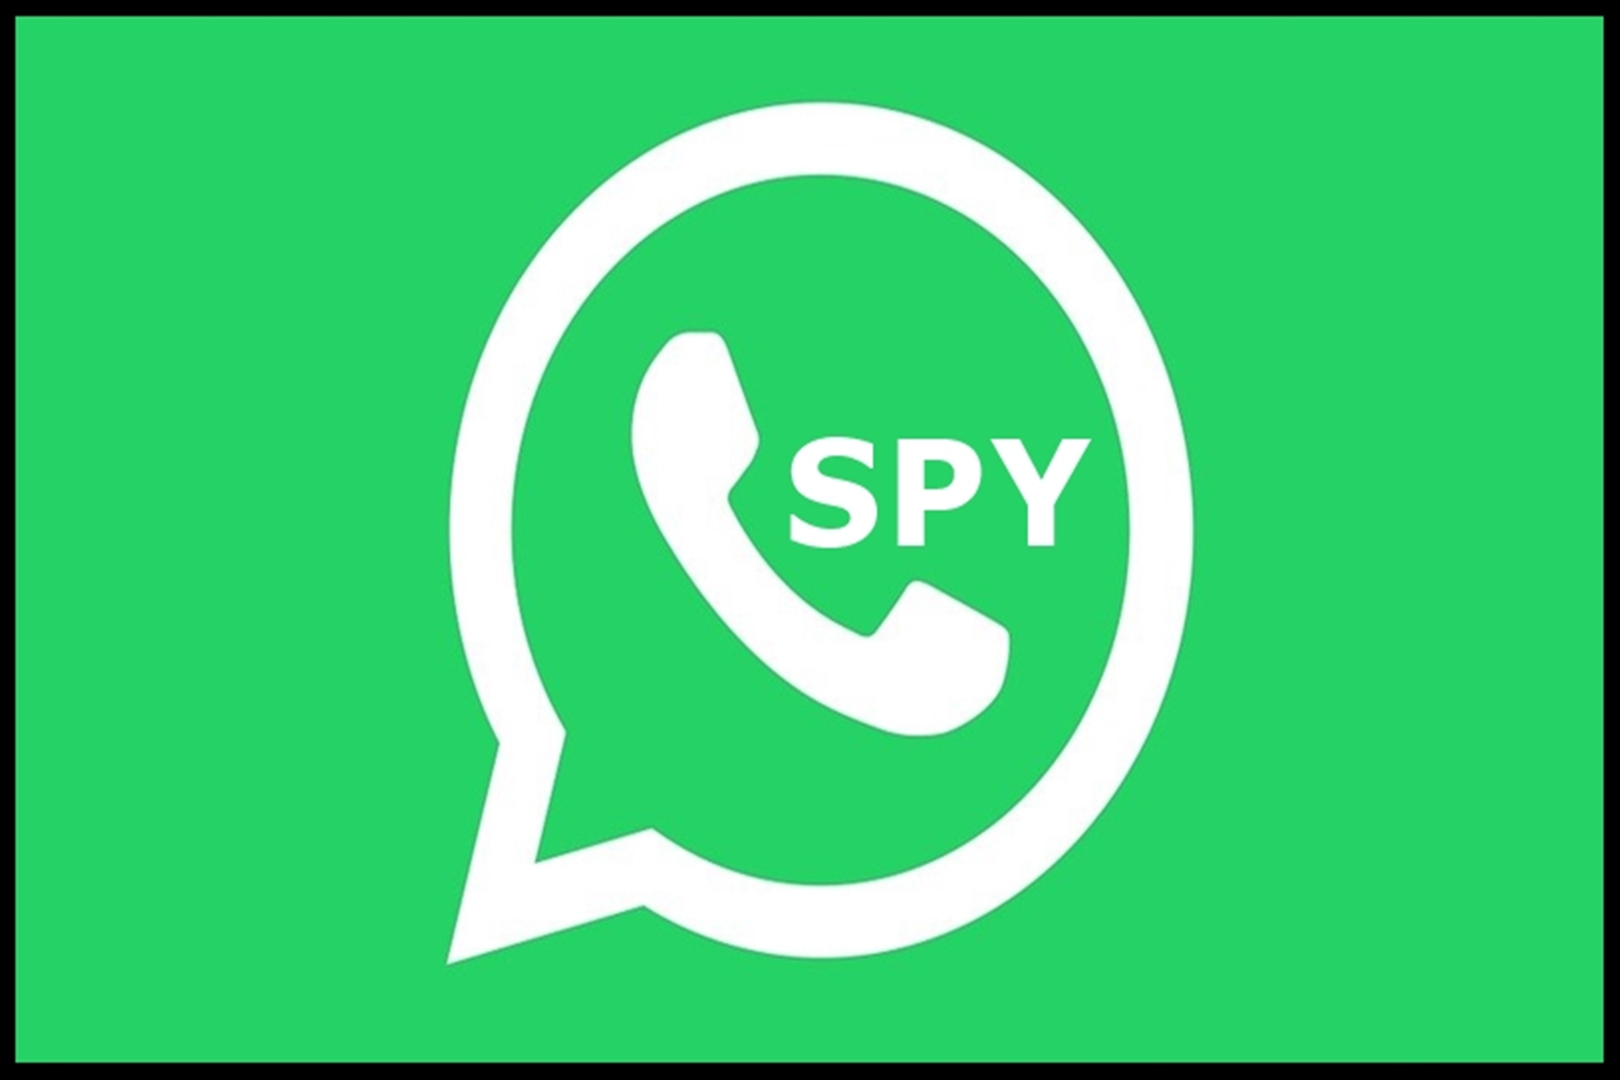 Social Spy Whatsapp, Aplikasi Penyadap WA yang Mampu Intip Chat Tanpa Ketauan!